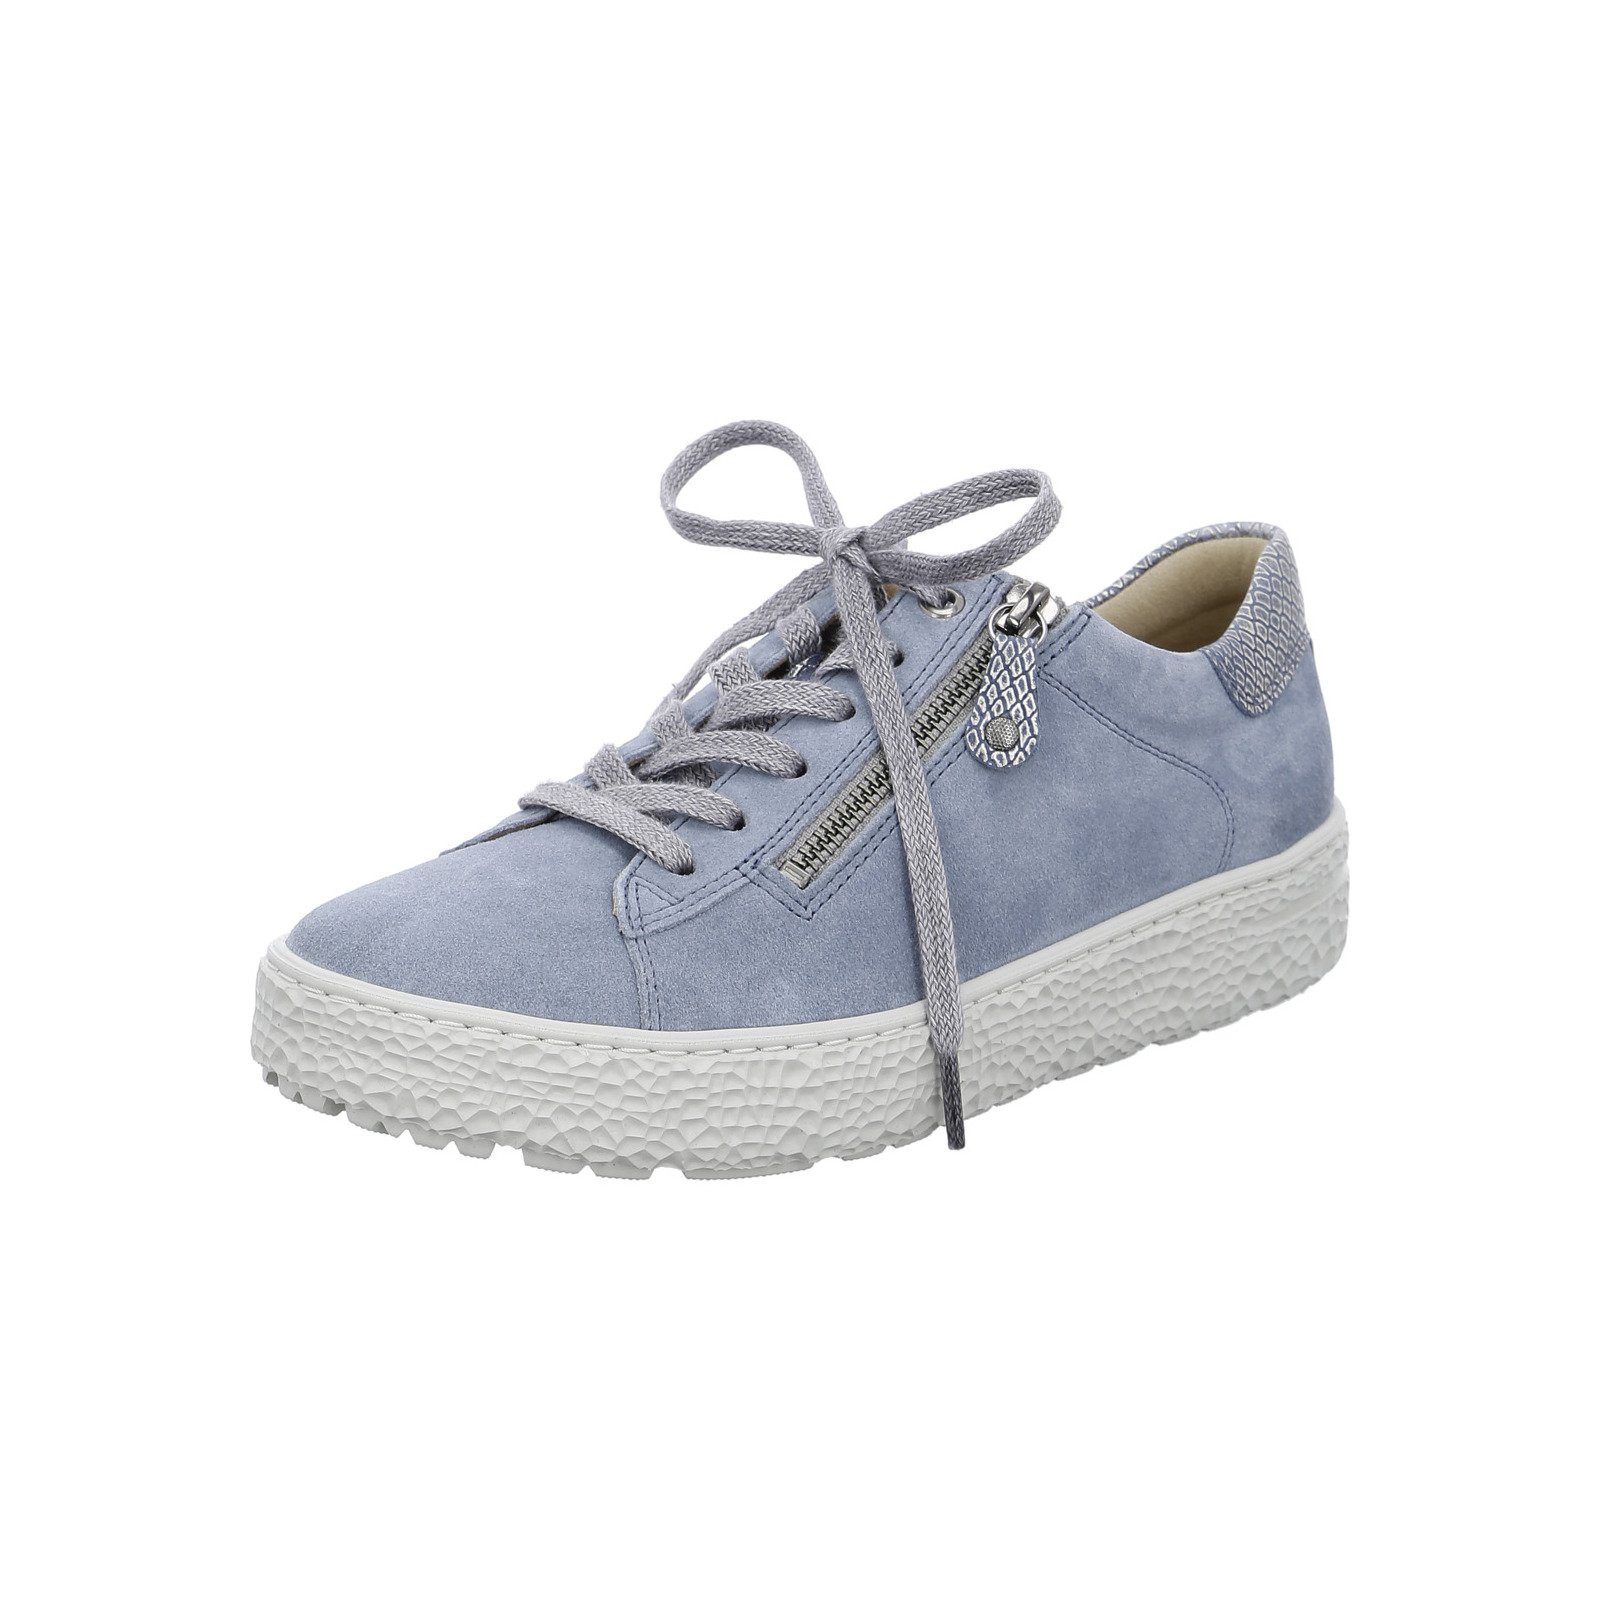 Hartjes Phil - Damen Schuhe Schnürschuh Sneaker Velours blau